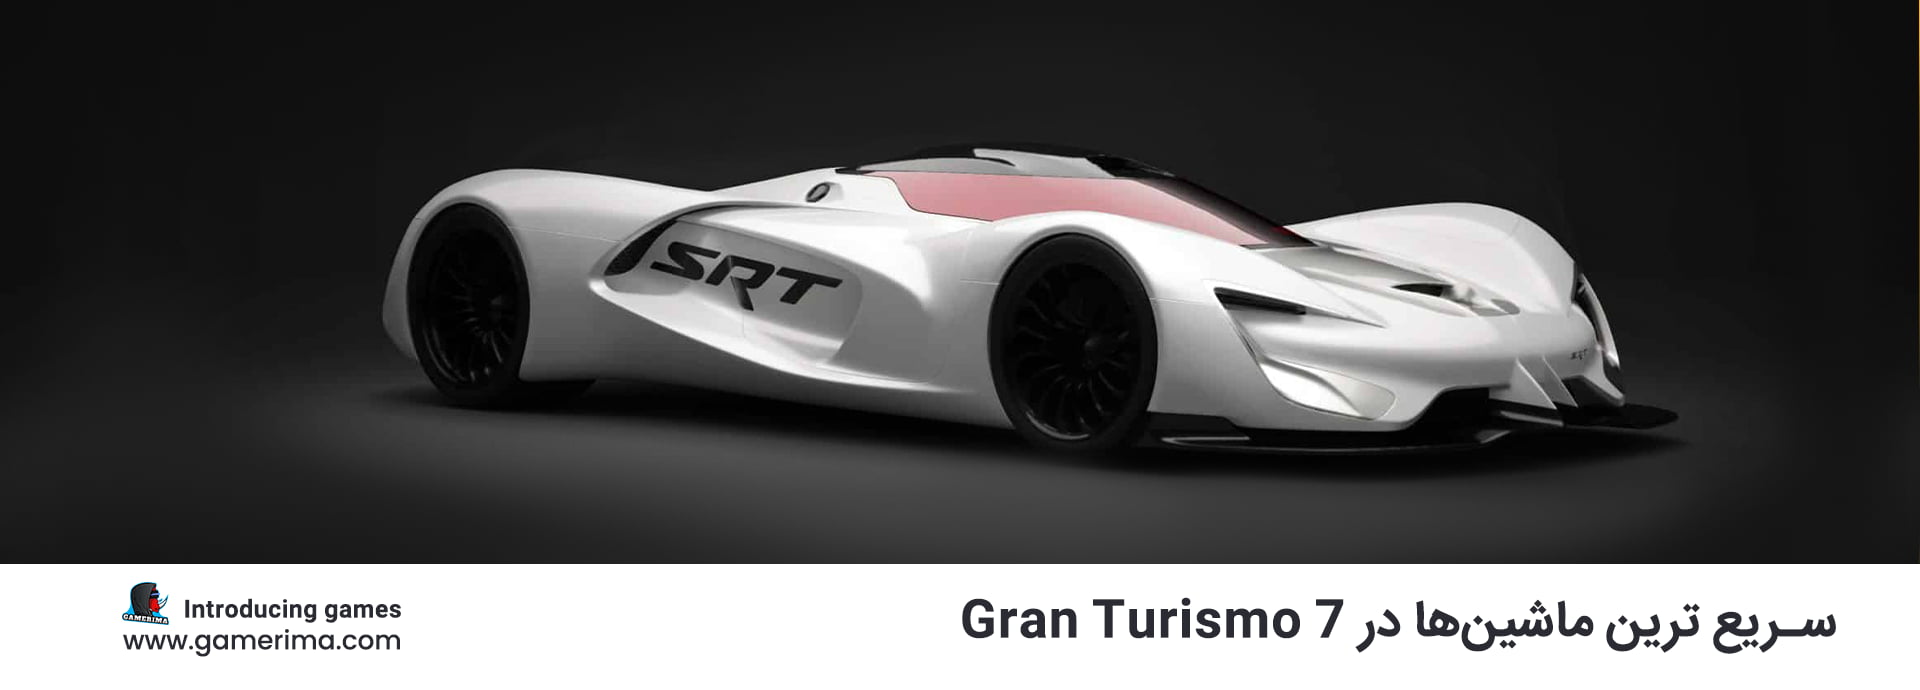 Best Cars in Gran Turismo 7